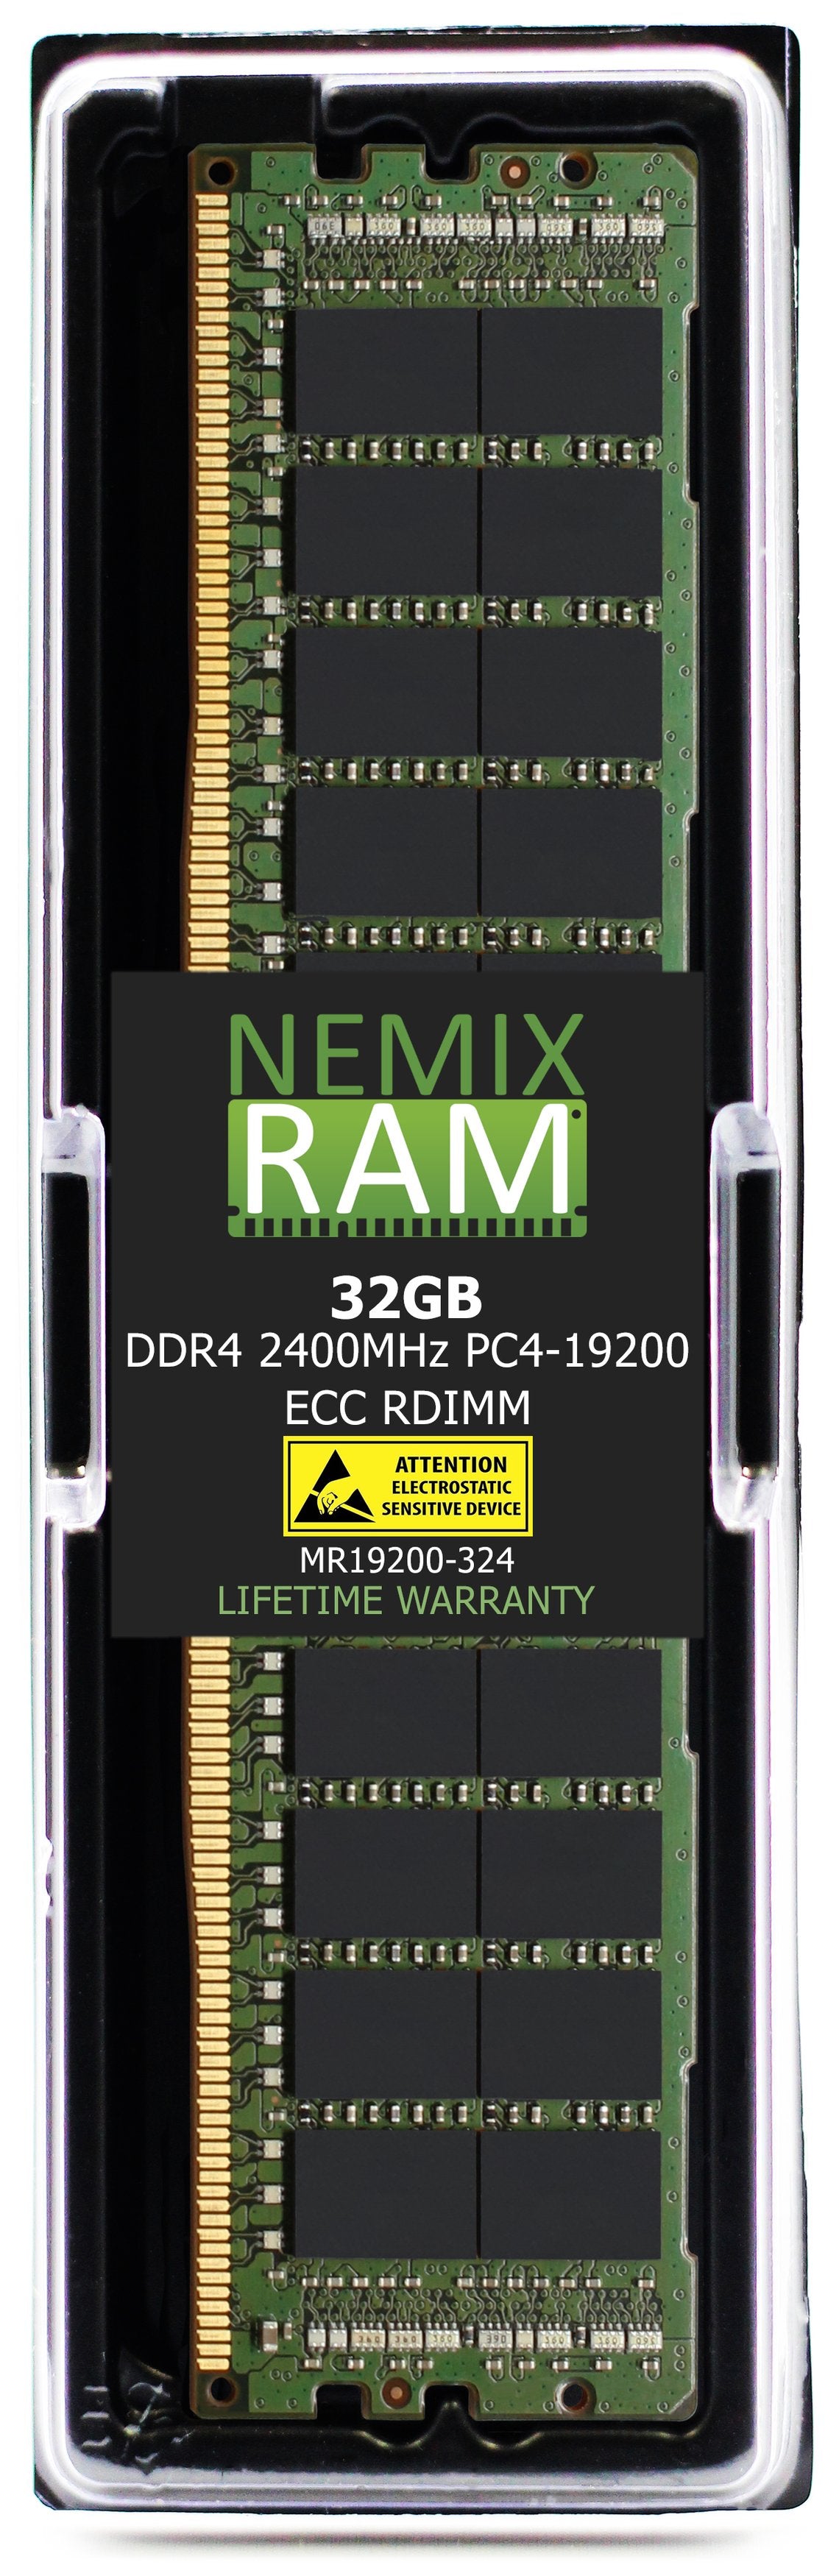 32GB DDR4 2400MHZ PC4-19200 RDIMM Compatible with Supermicro MEM-DR432L-HL01-ER24